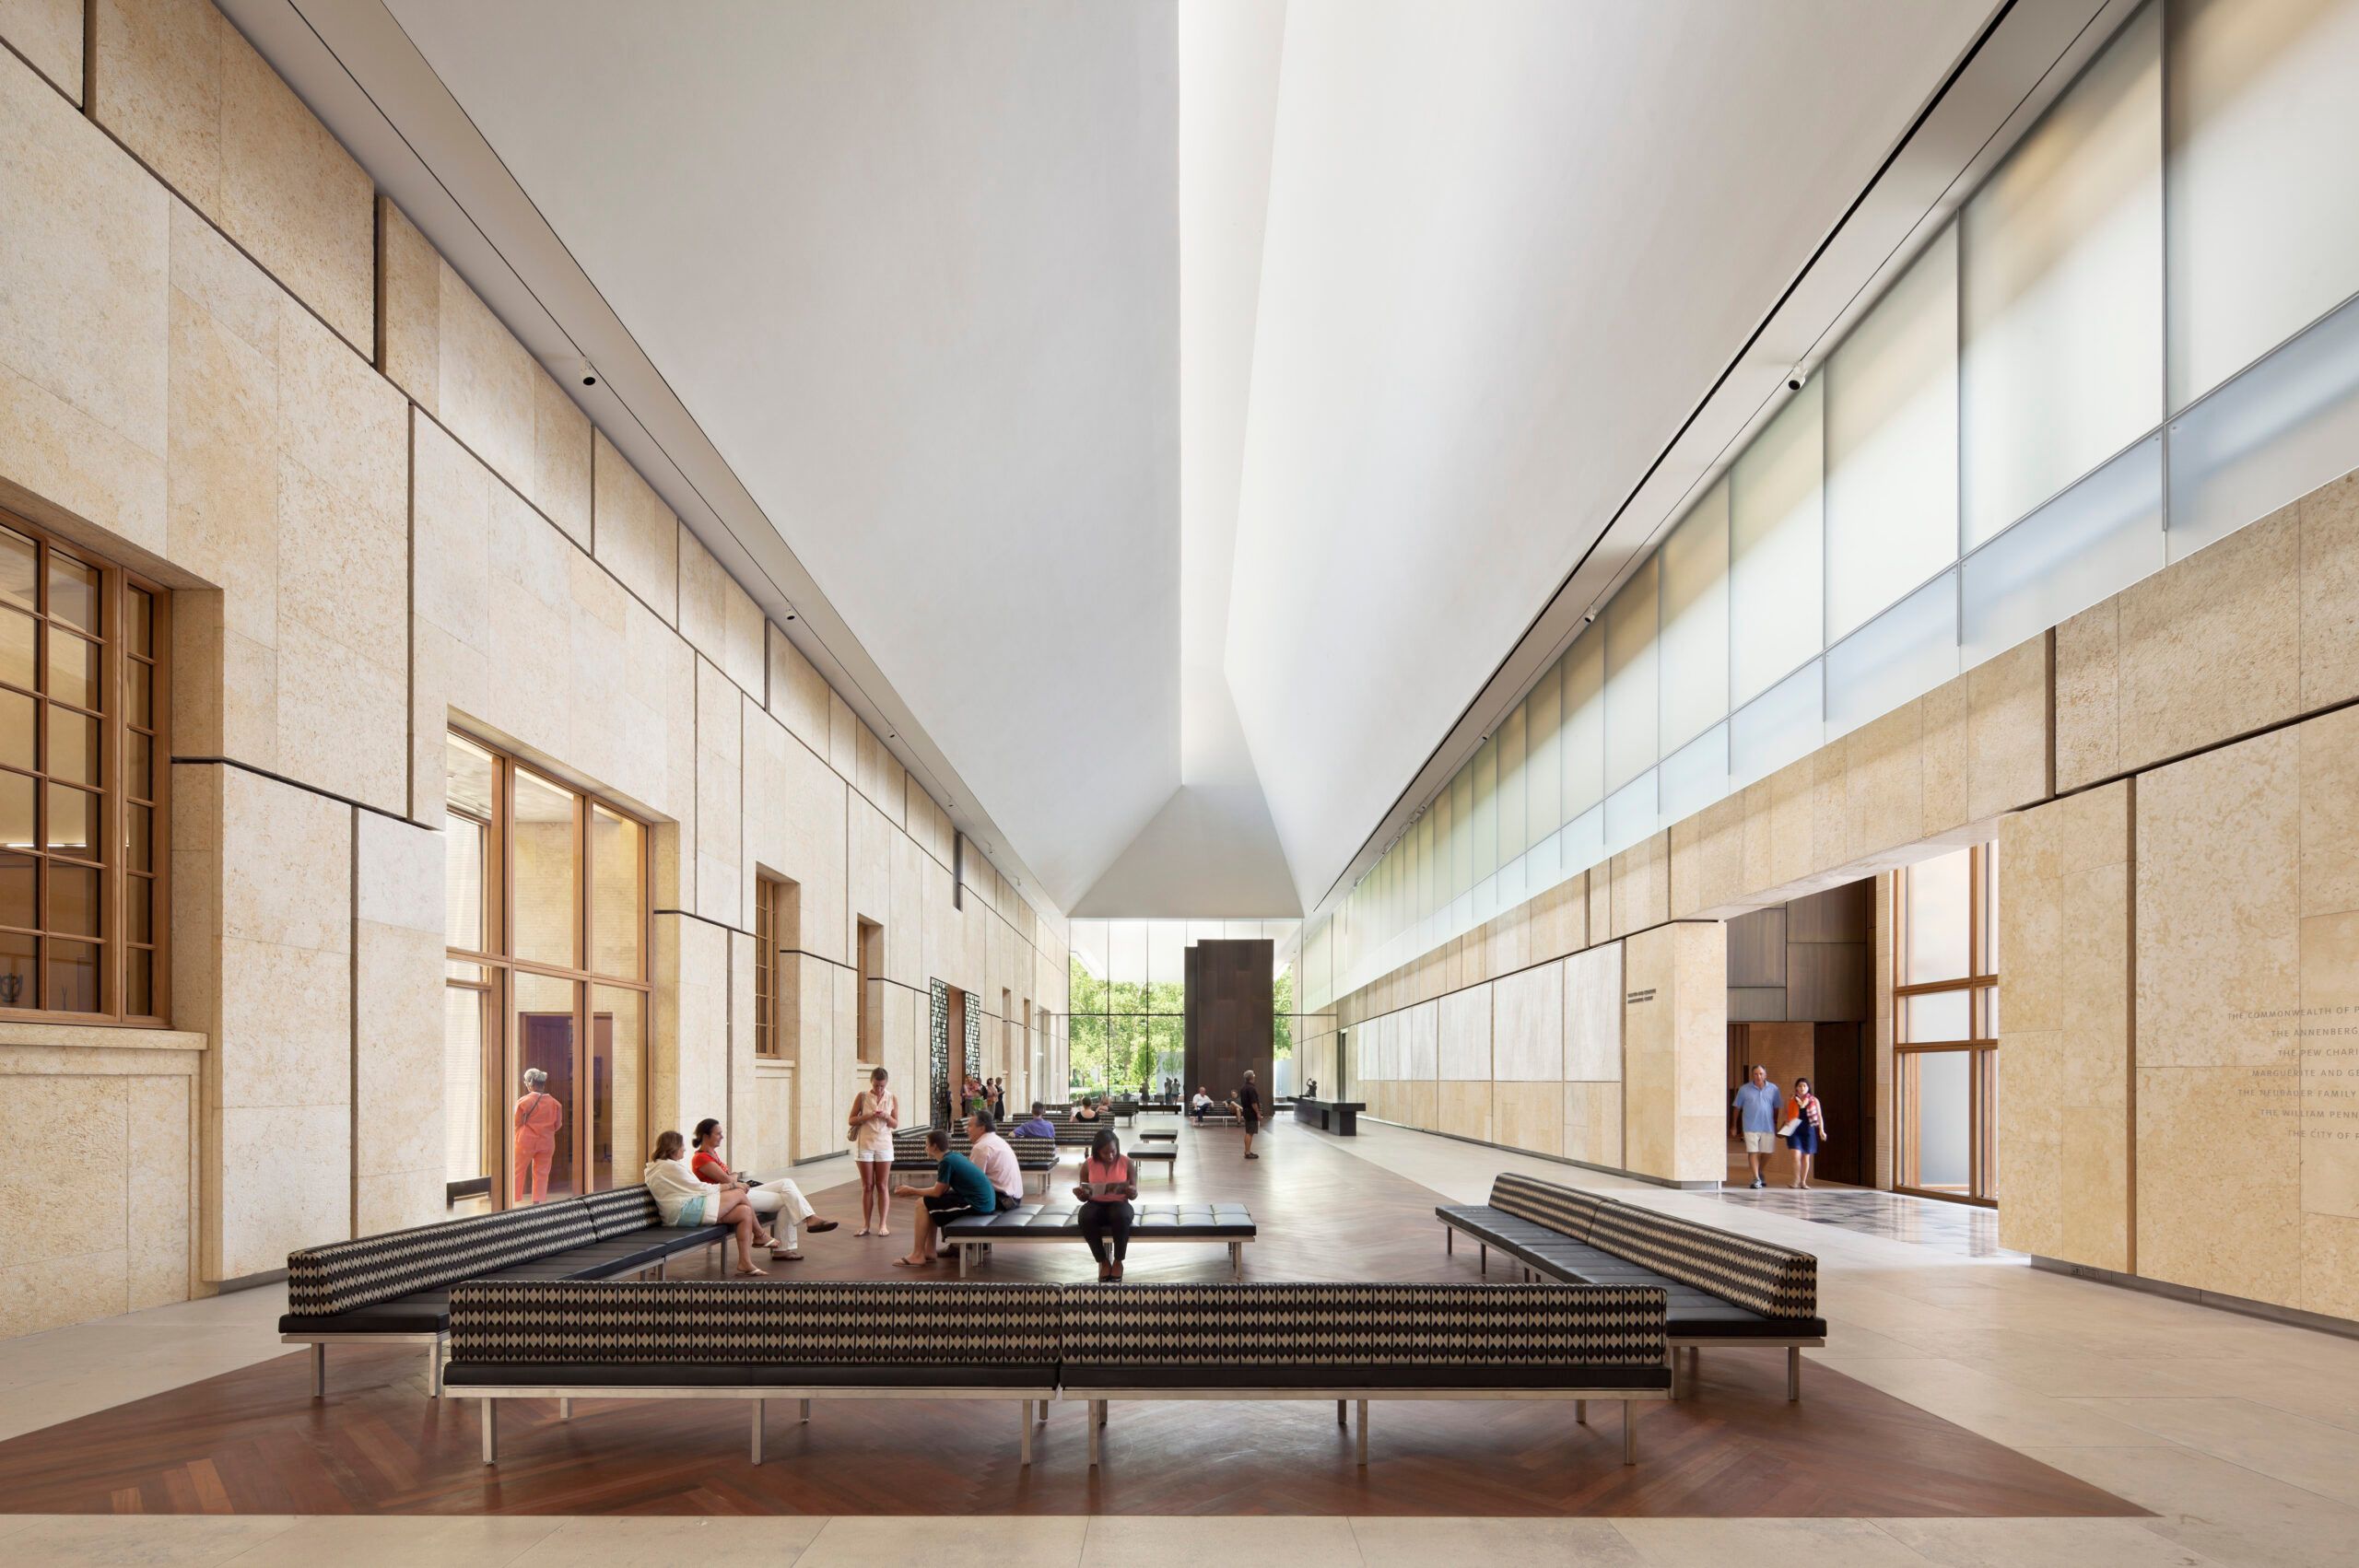 Interior lounge at Barnes Foundation